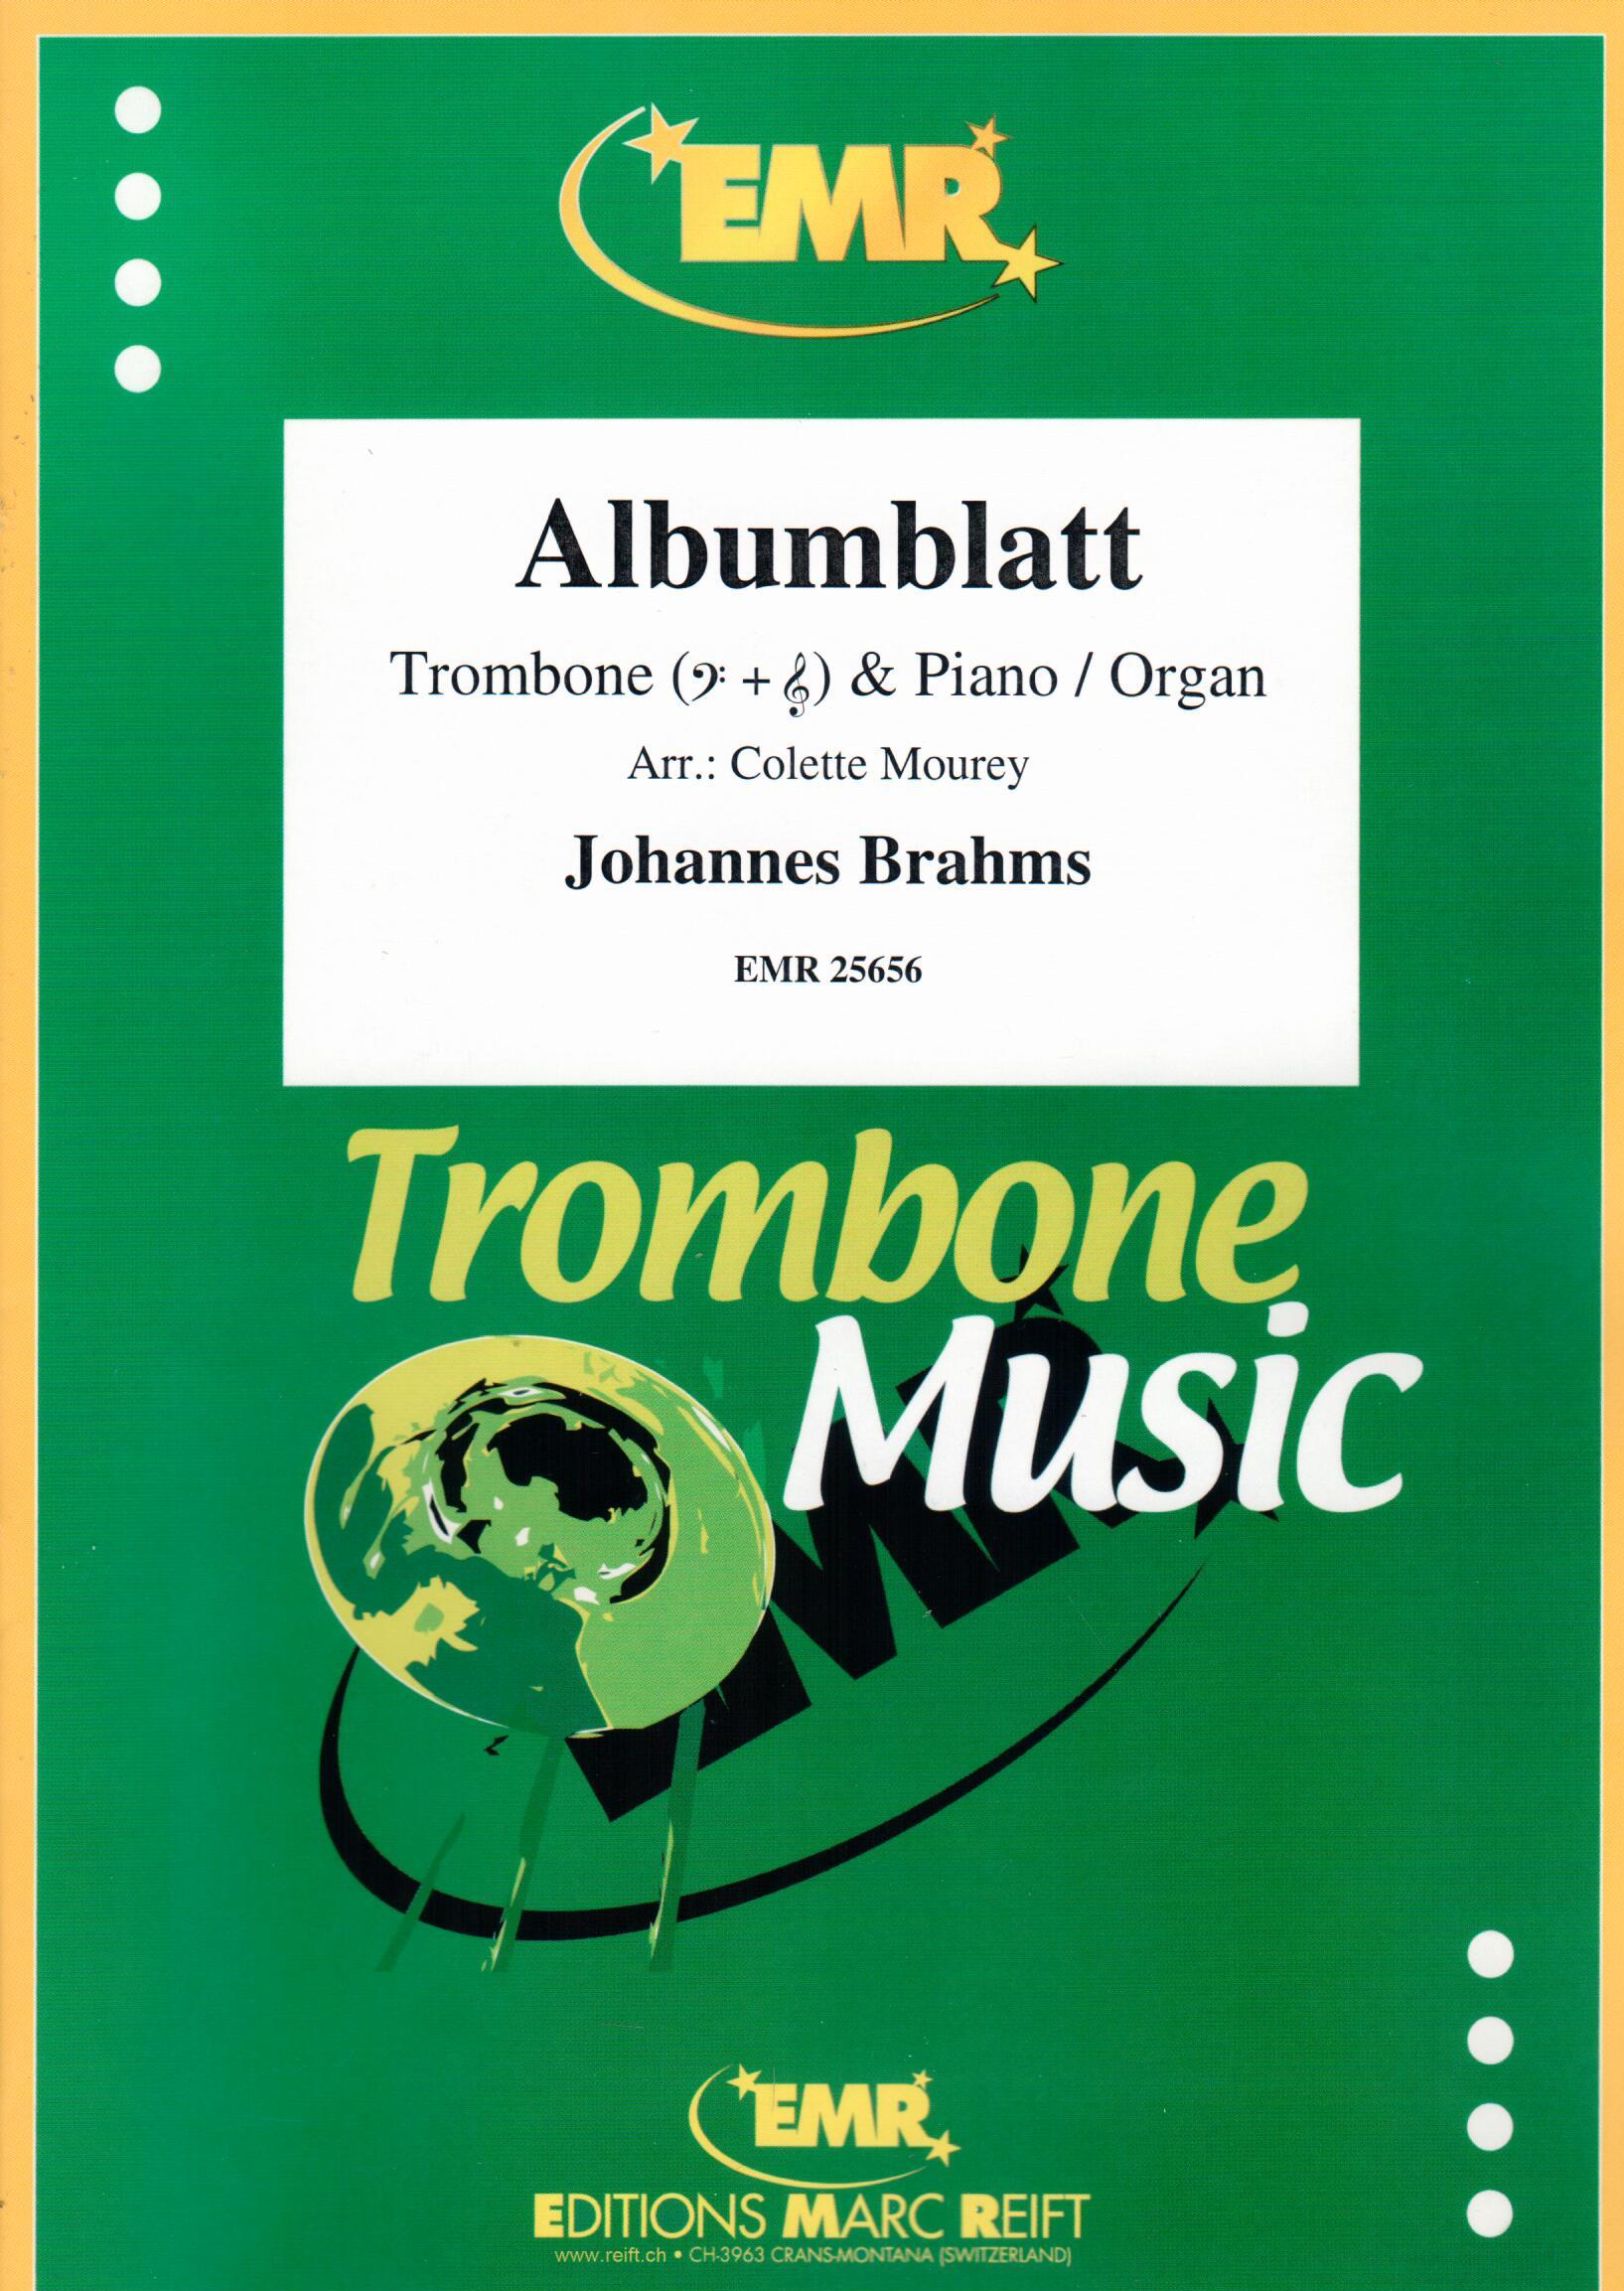 ALBUMBLATT, SOLOS - Trombone